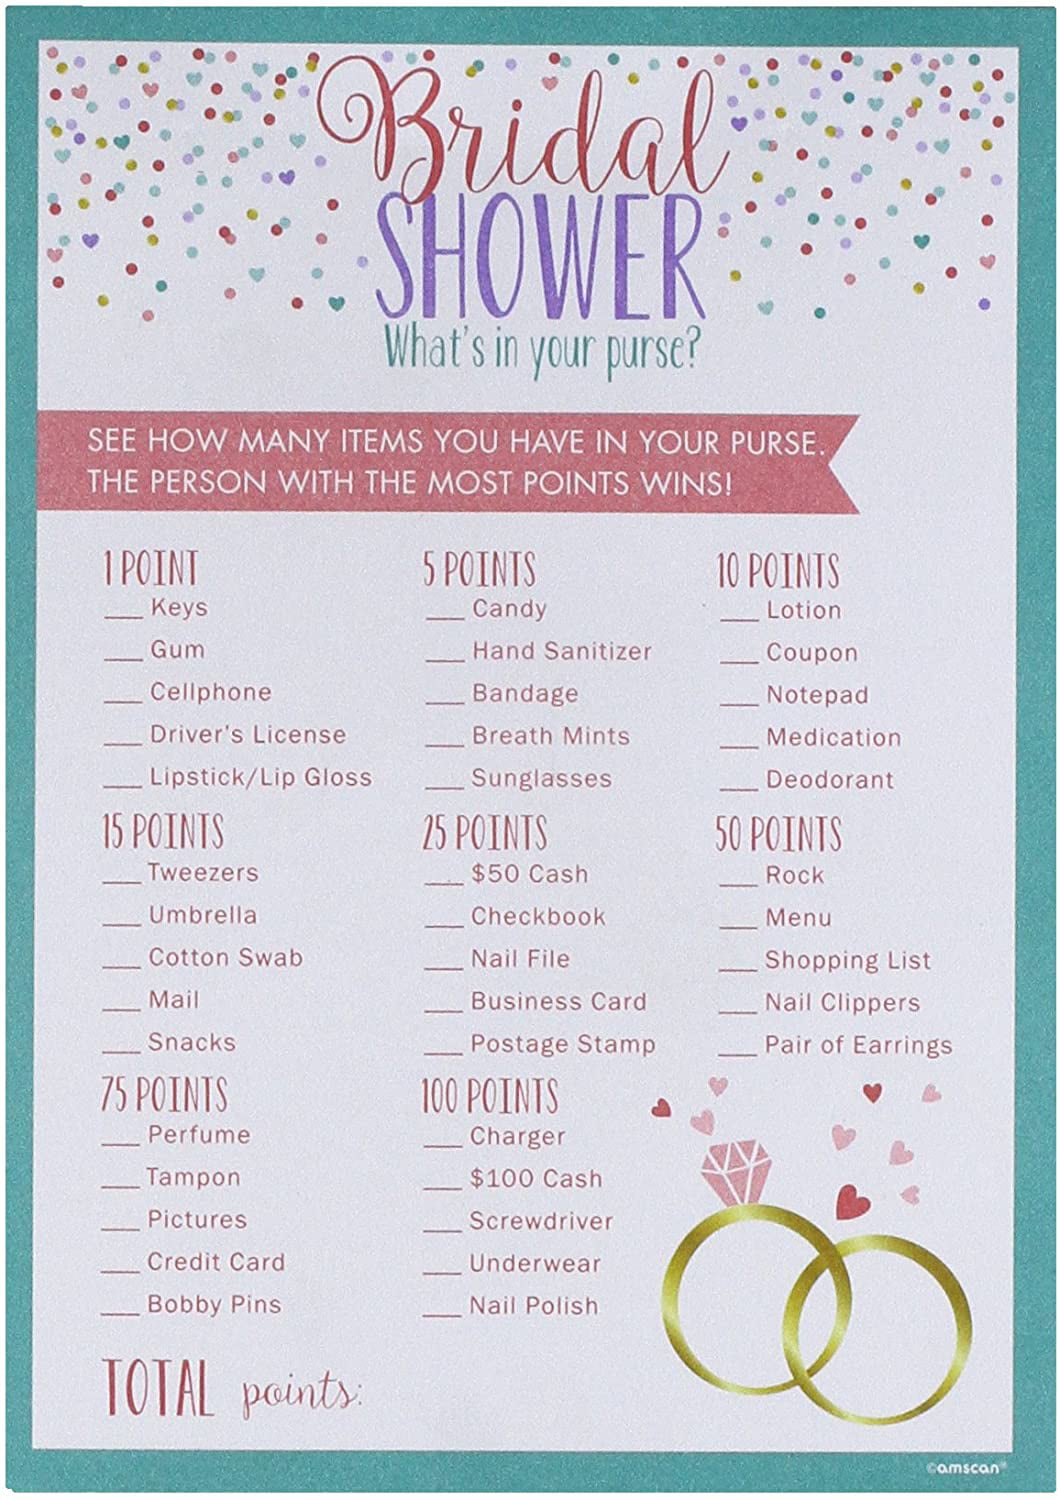 Whats In Your Purse? Bridal Shower Game - Walmart.com - Walmart.com